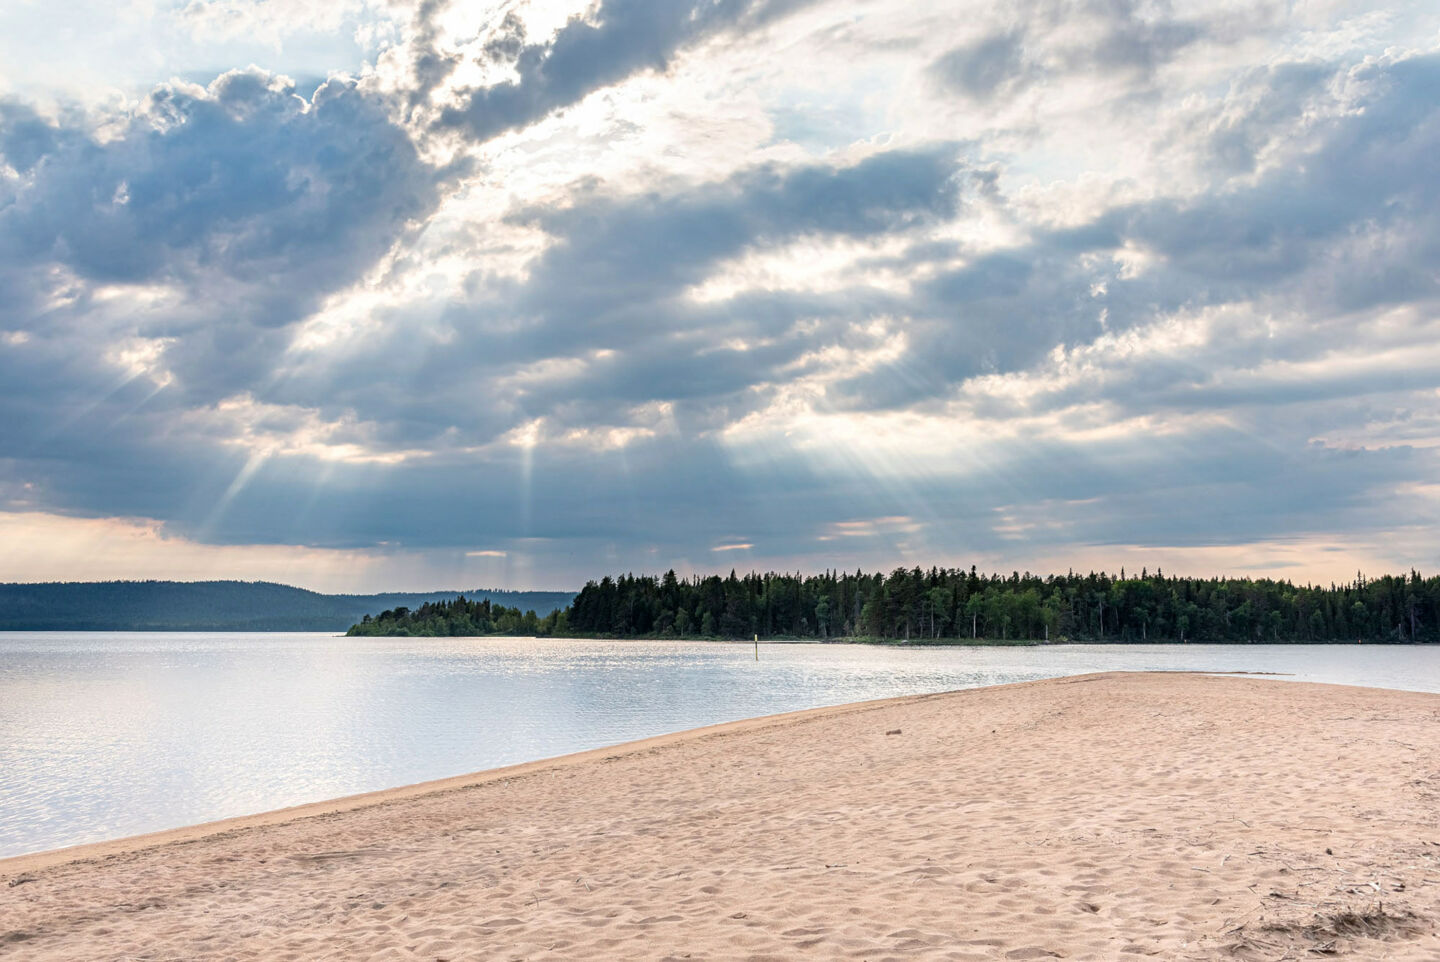 A beach in Pello, a Finnish Lapland filming location